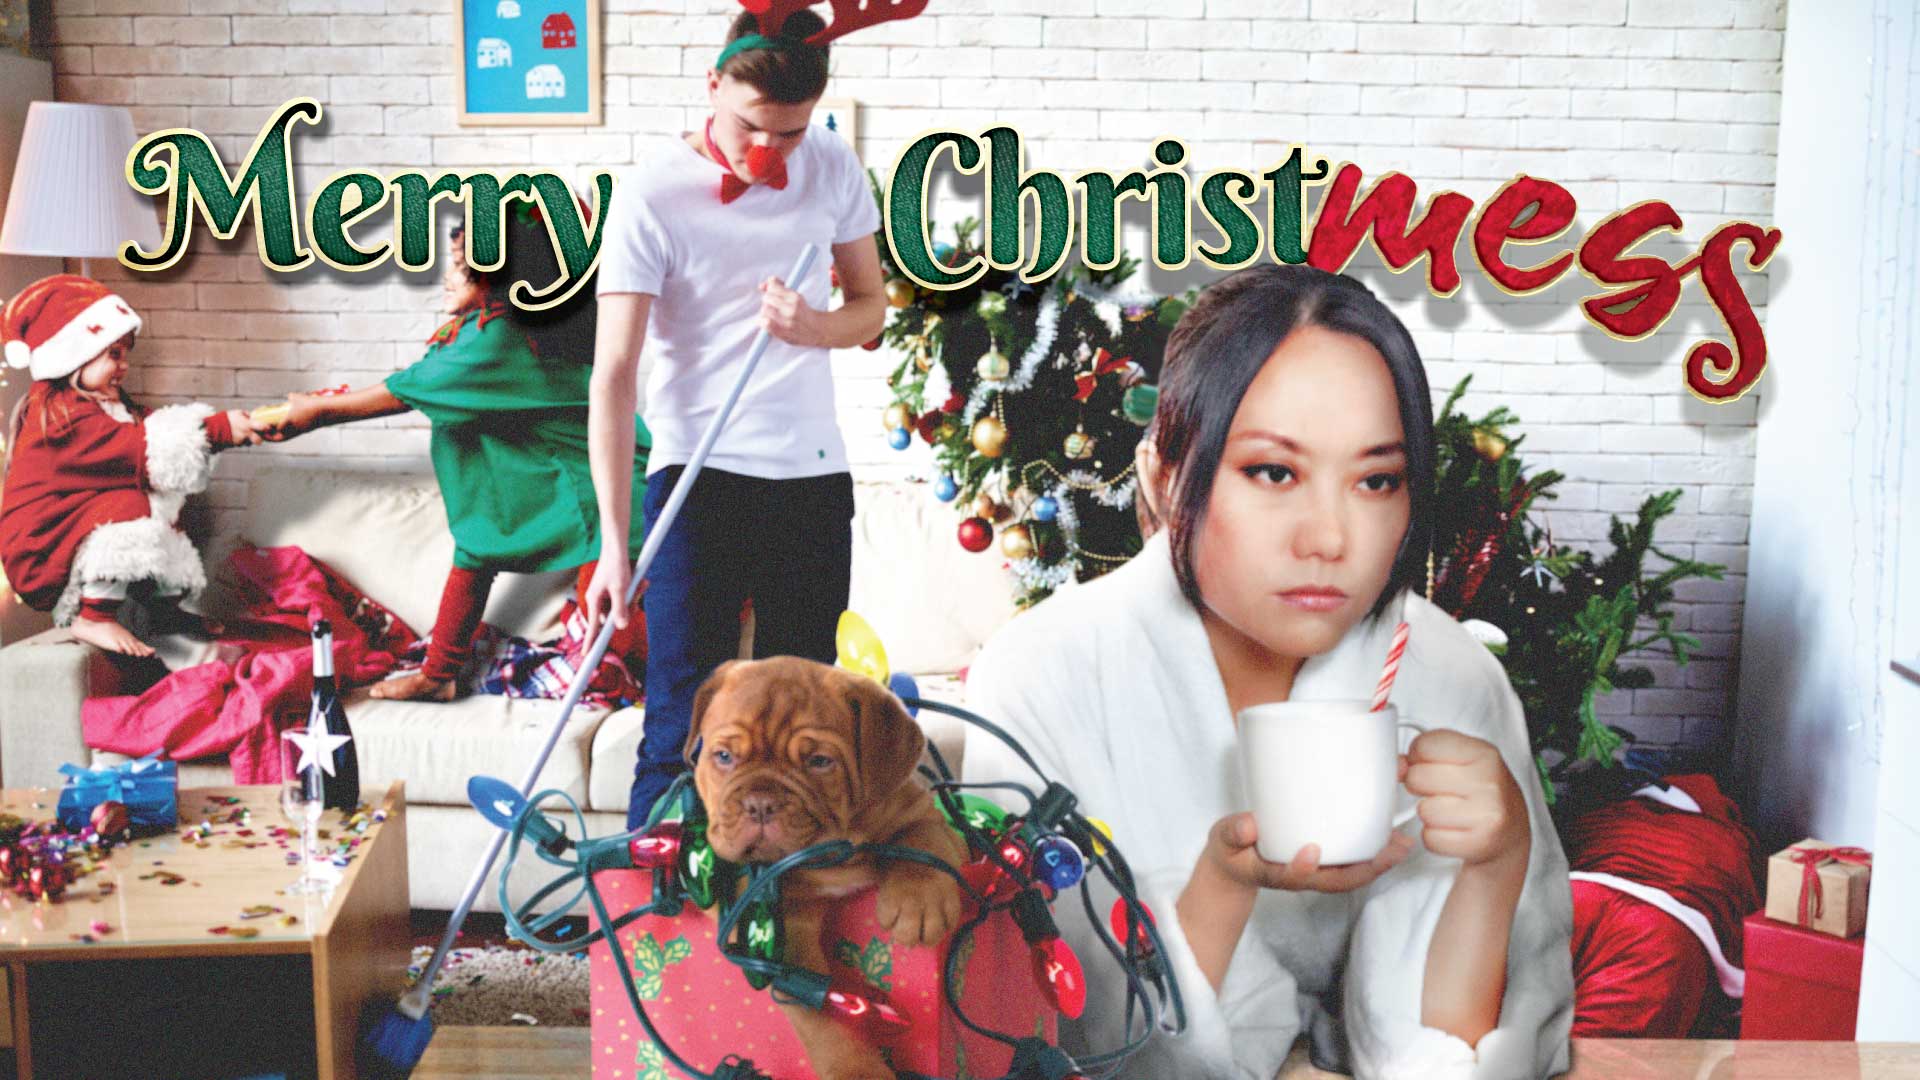 Merry ChristMess banner